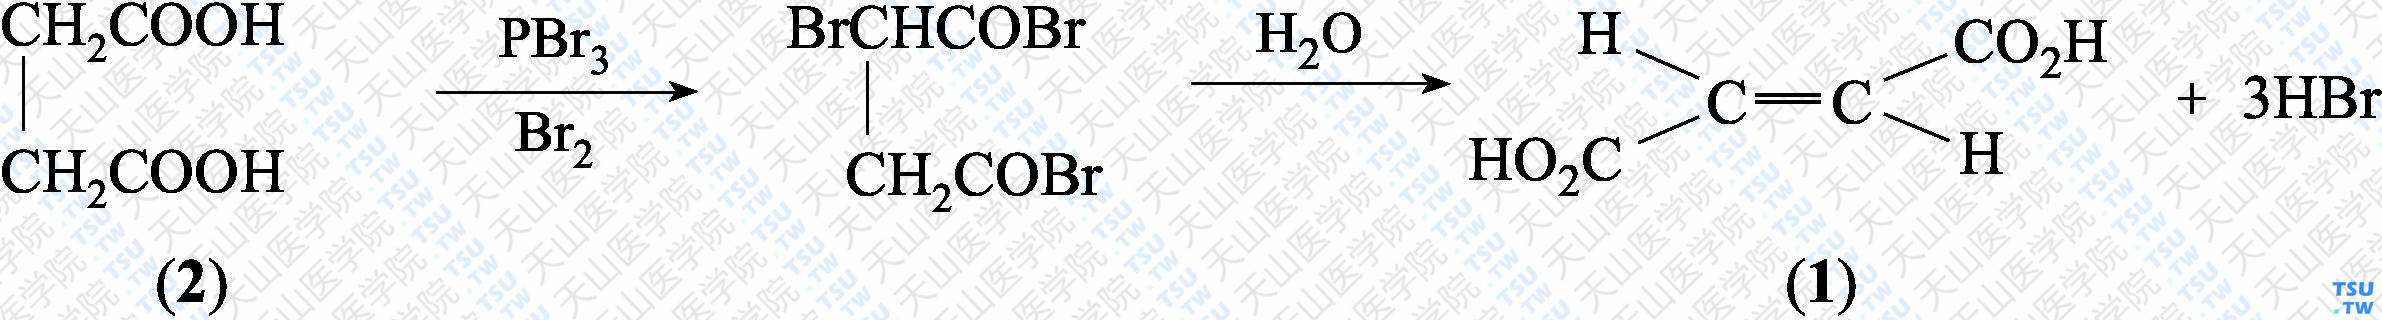 反丁烯二酸（分子式：C<sub>4</sub>H<sub>4</sub>O<sub>4</sub>）的合成方法路线及其结构式